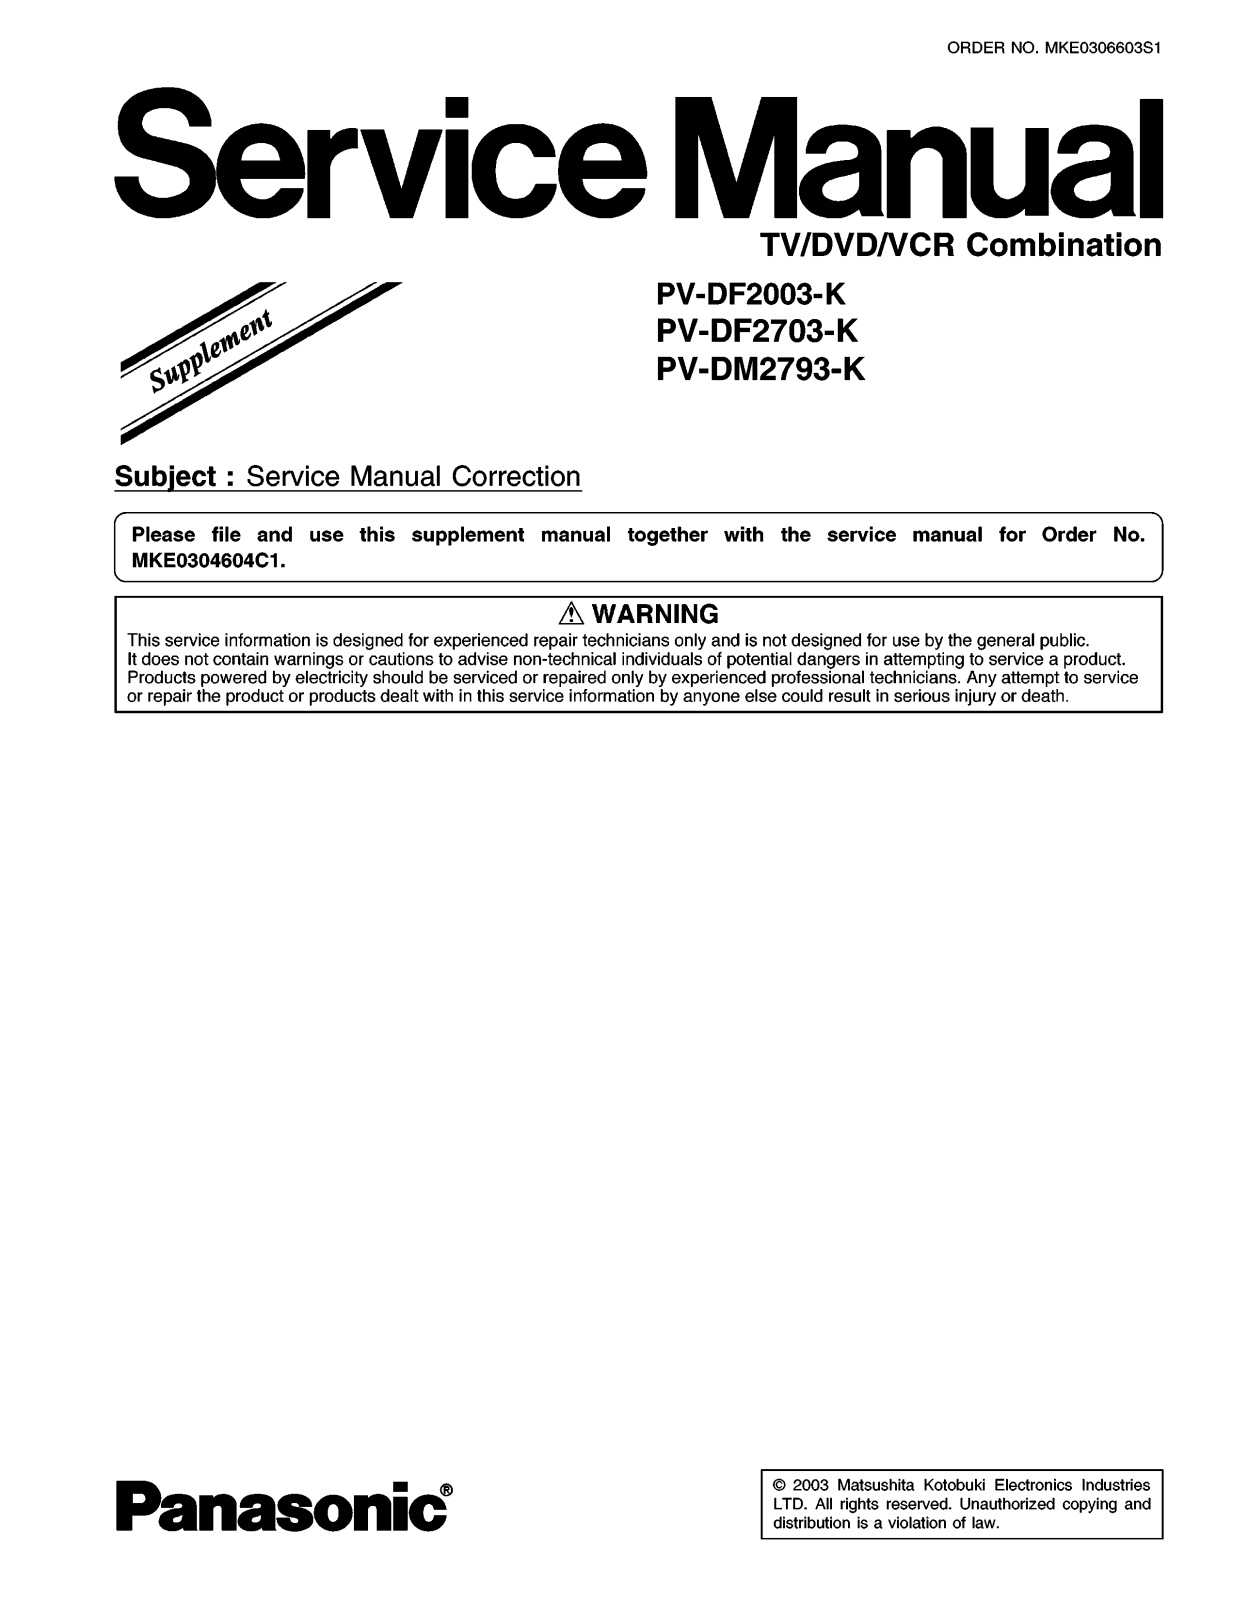 Panasonic PV-DF2003-K Service Manual